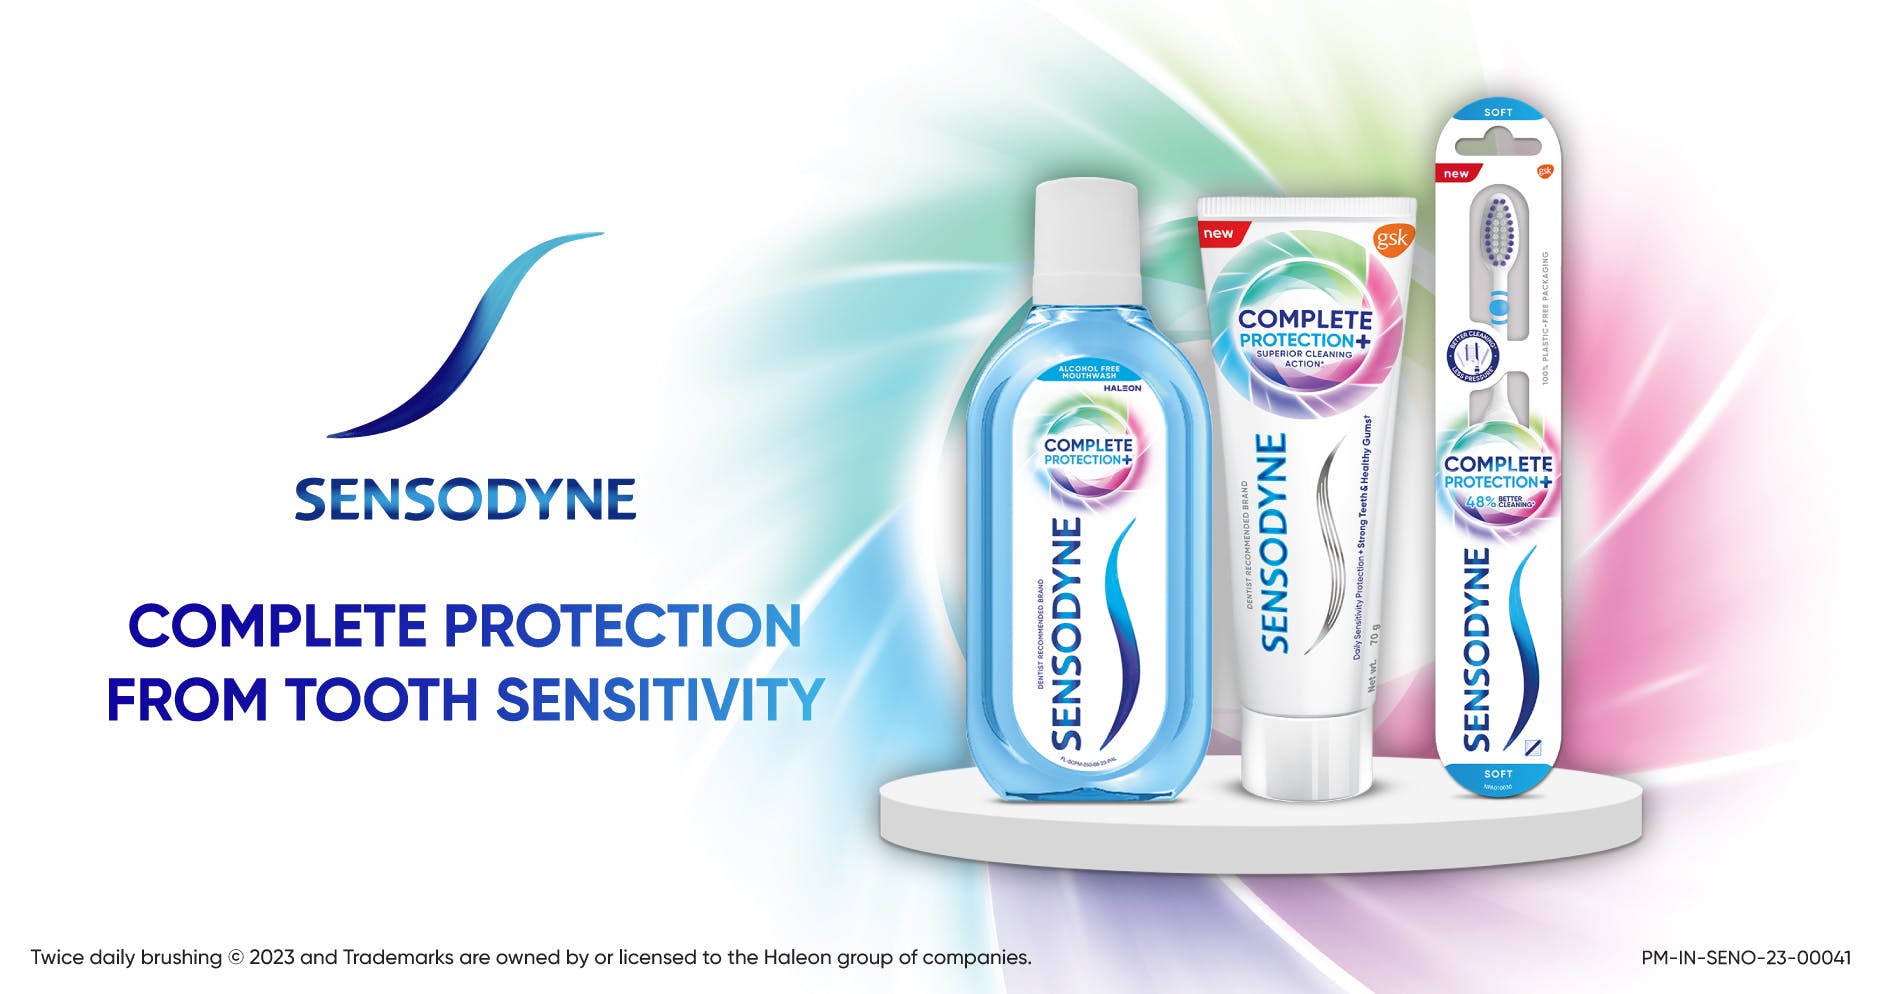 Sensodyne Complete Protection+ Mouthwash